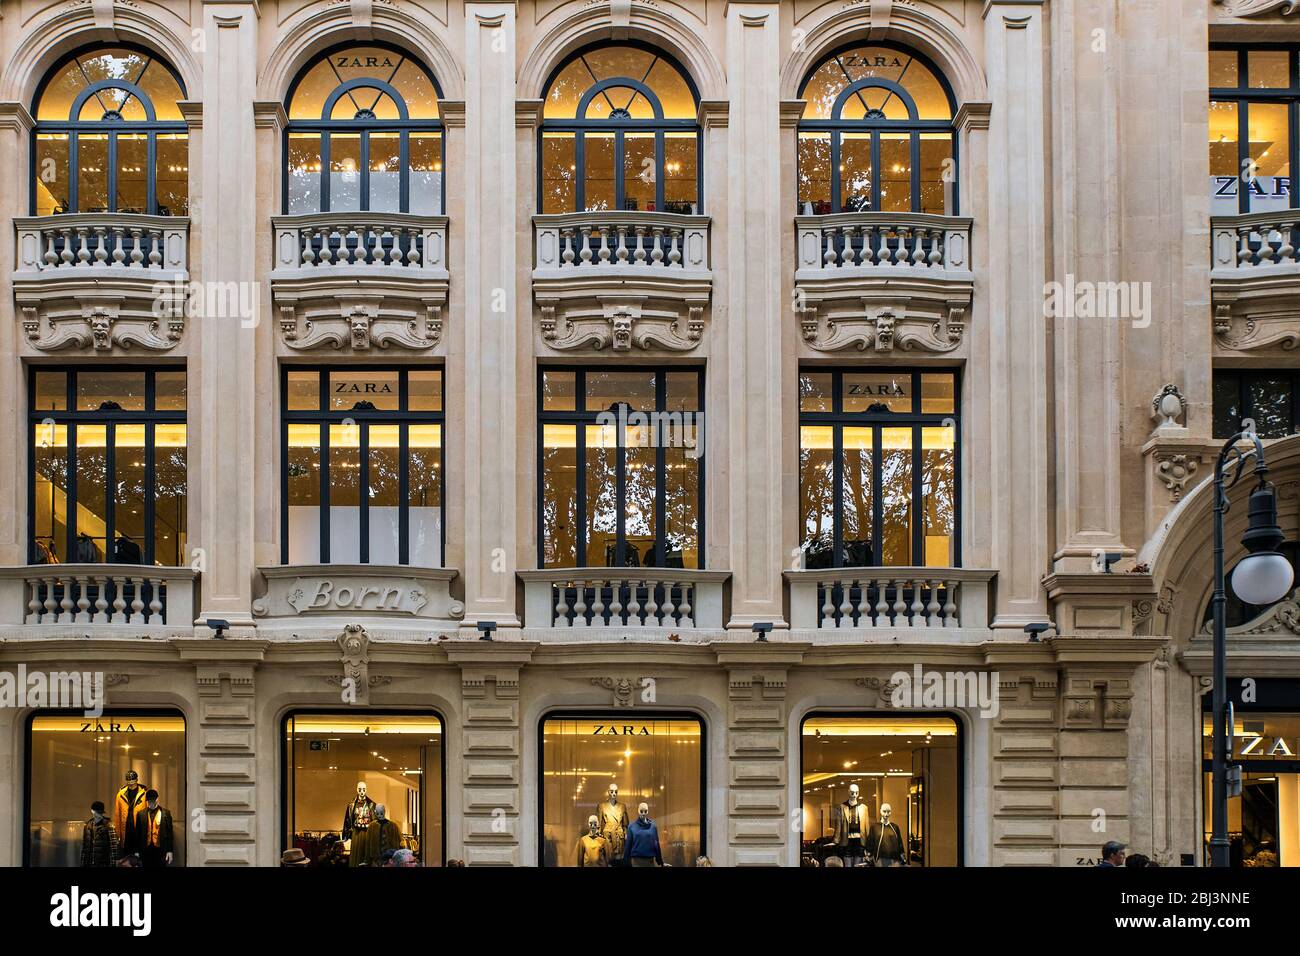 Zara department store in Palma in Spain Stock Photo - Alamy